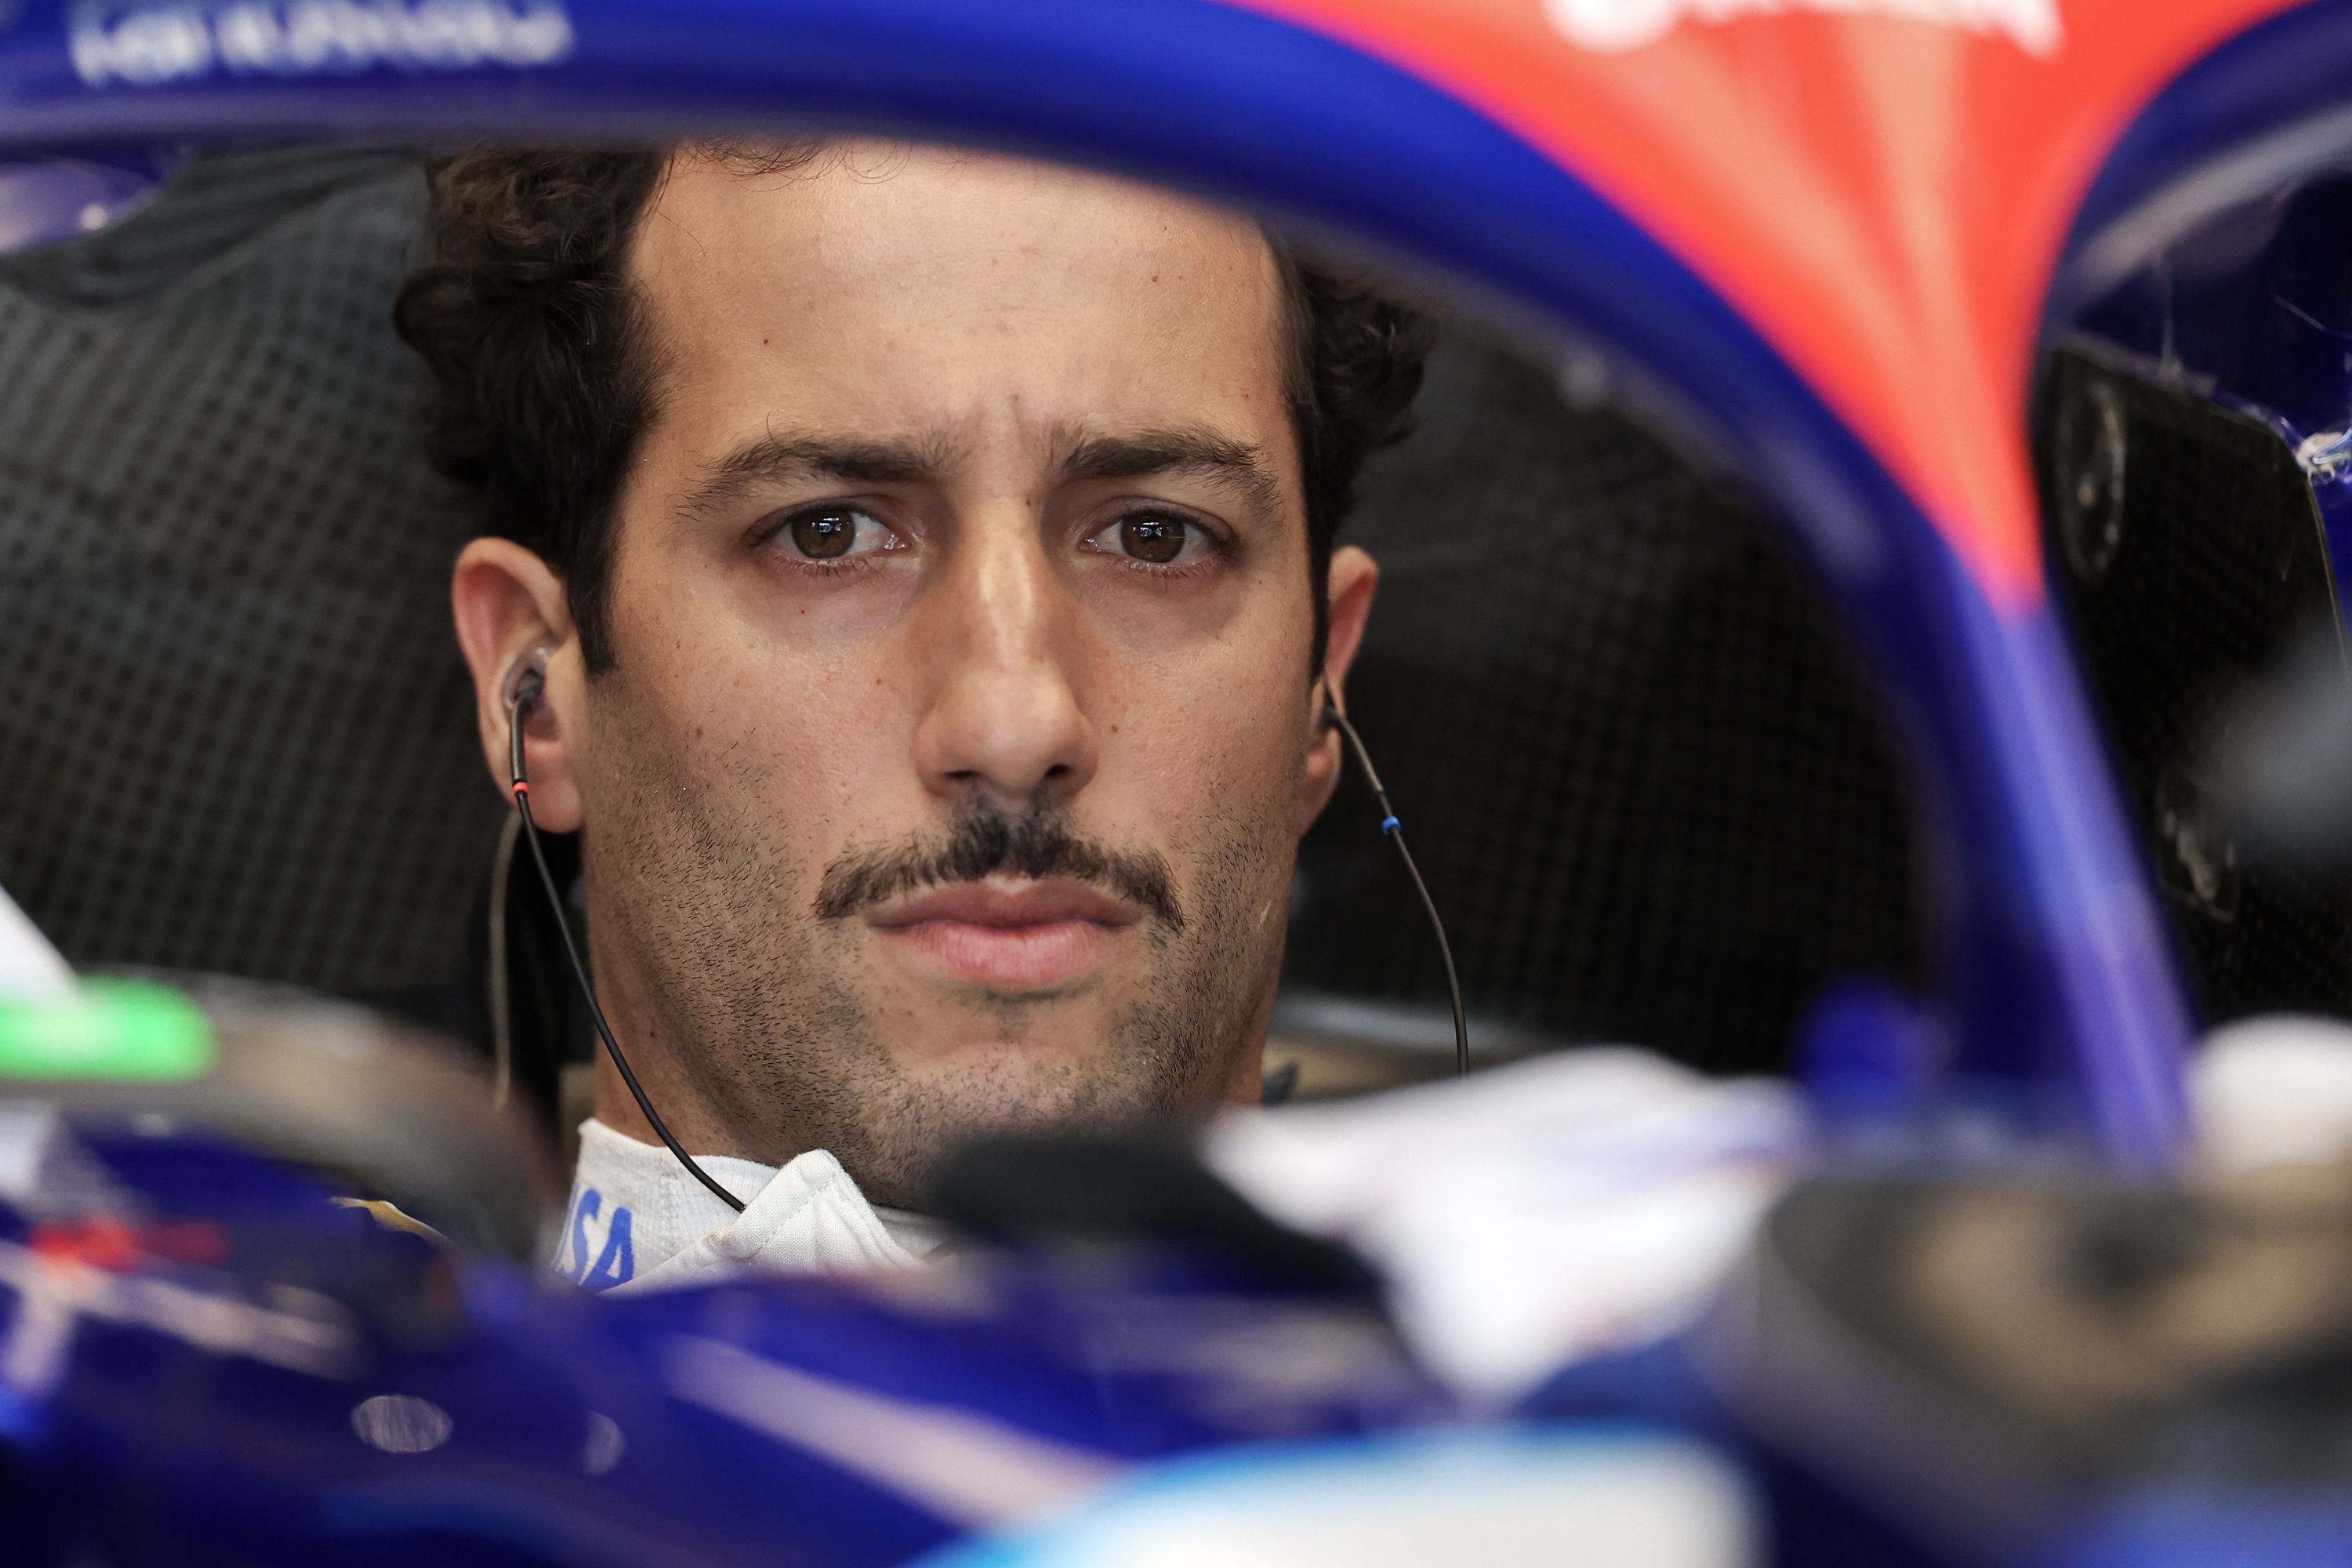 Daniel Ricciardo 'met with reality' after dramatic slide at Miami Grand Prix